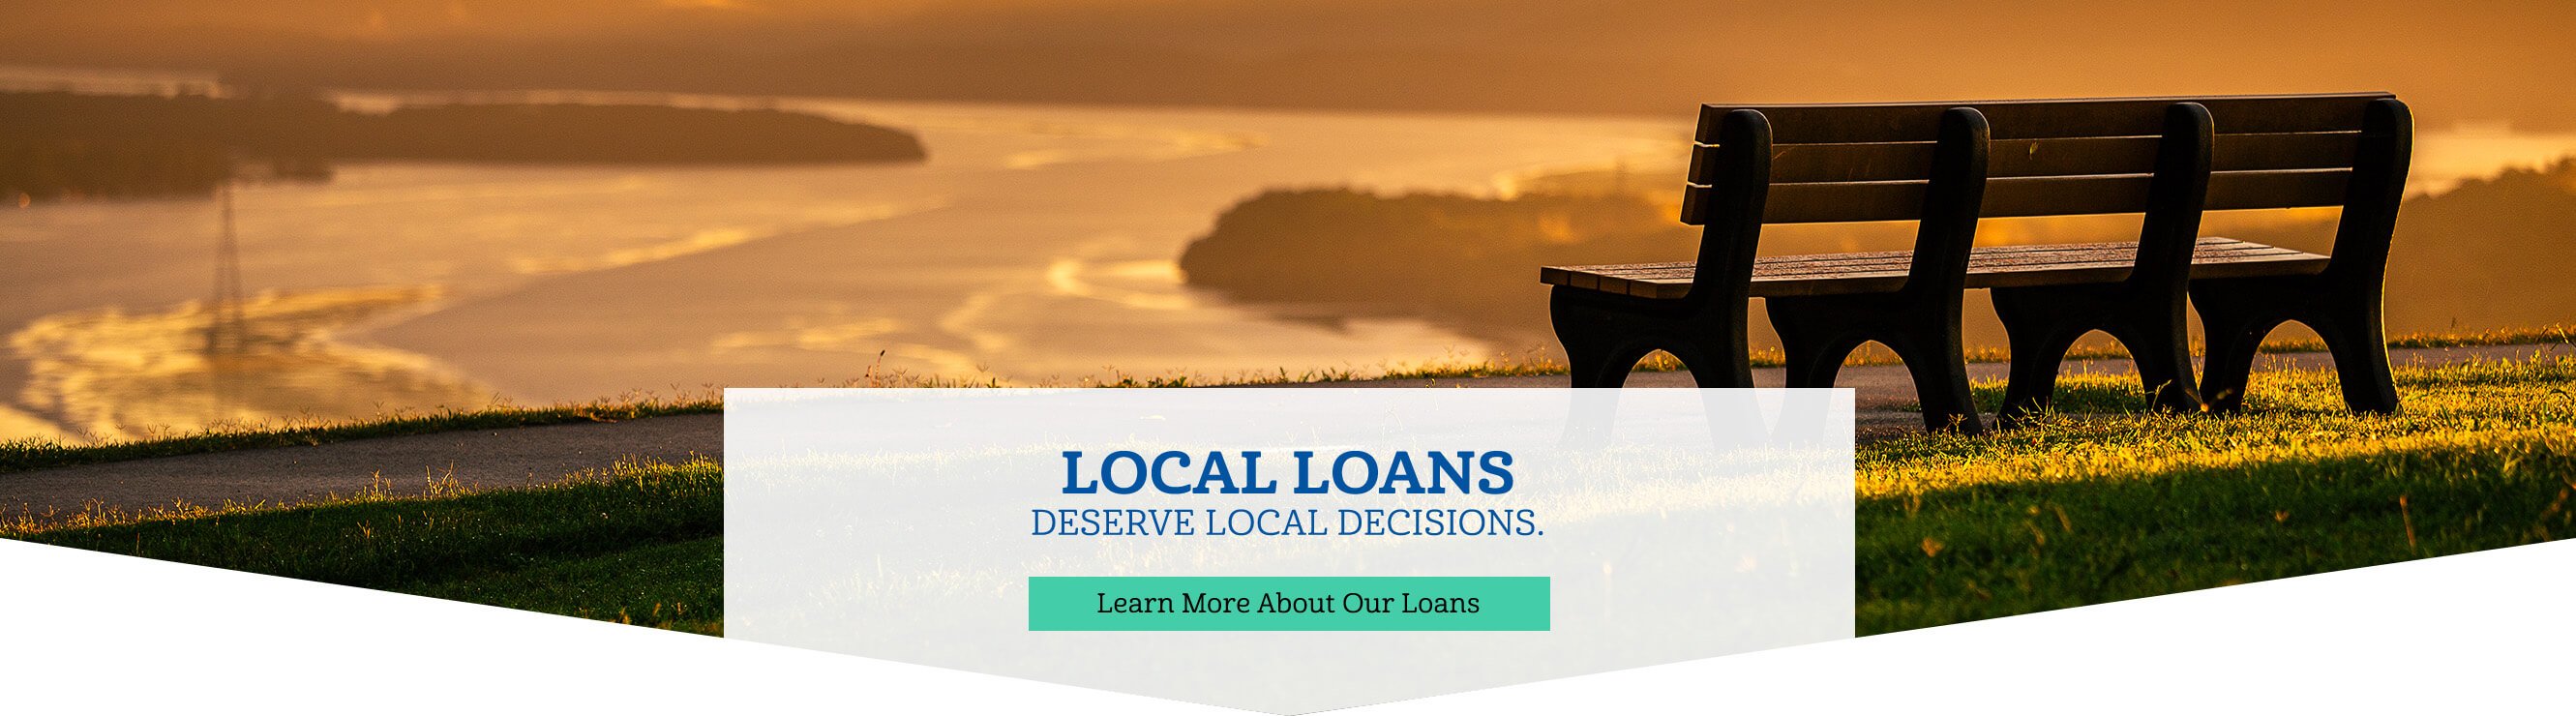 Local Loans Deserve Local Decisions